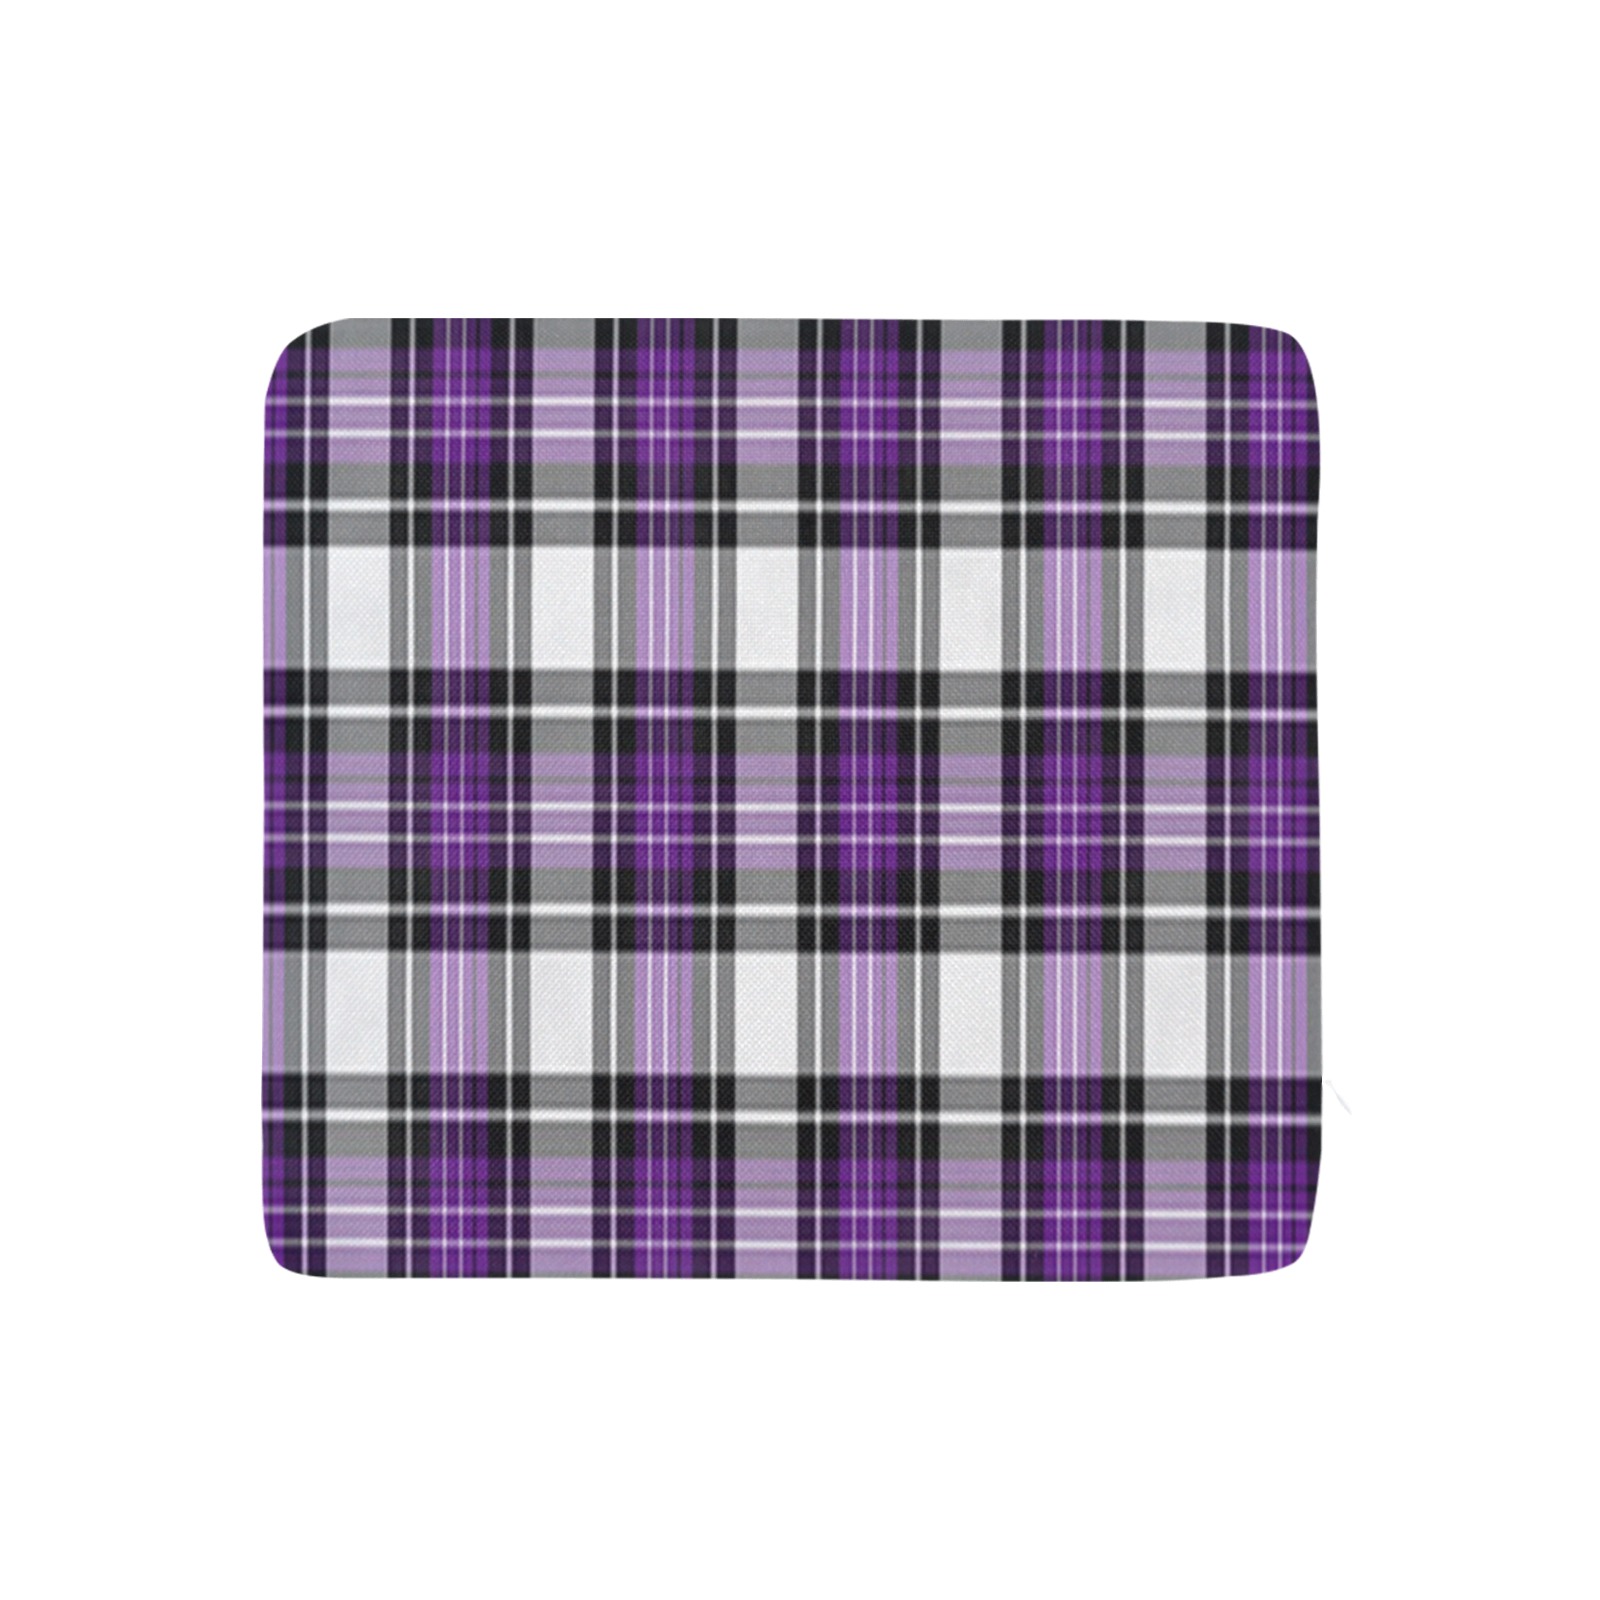 Purple Black Plaid Rectangular Seat Cushion